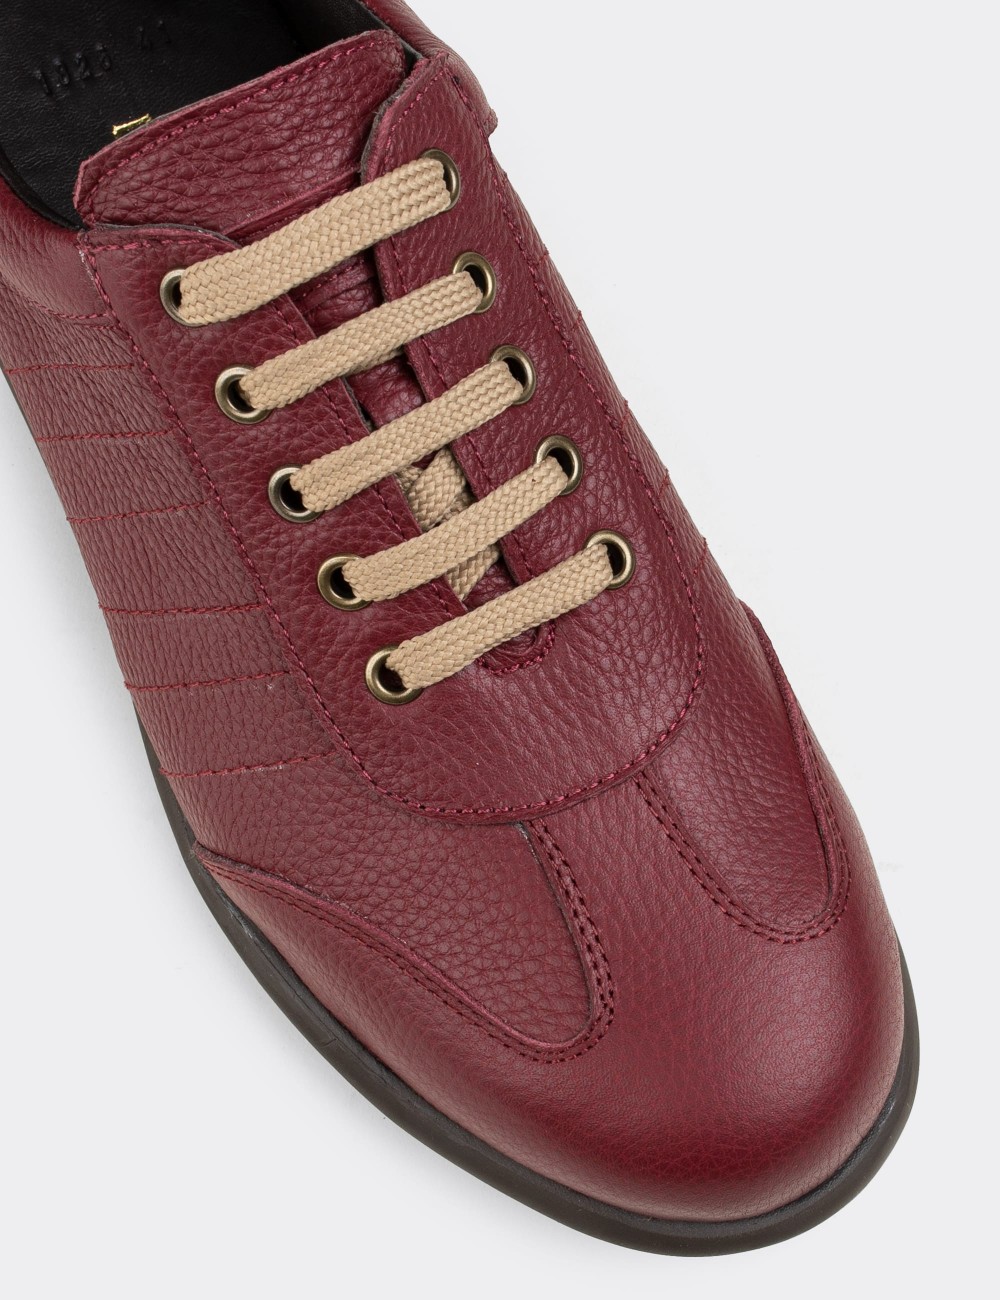 Burgundy Nubuck Leather Lace-up Shoes - 01826MBRDC03